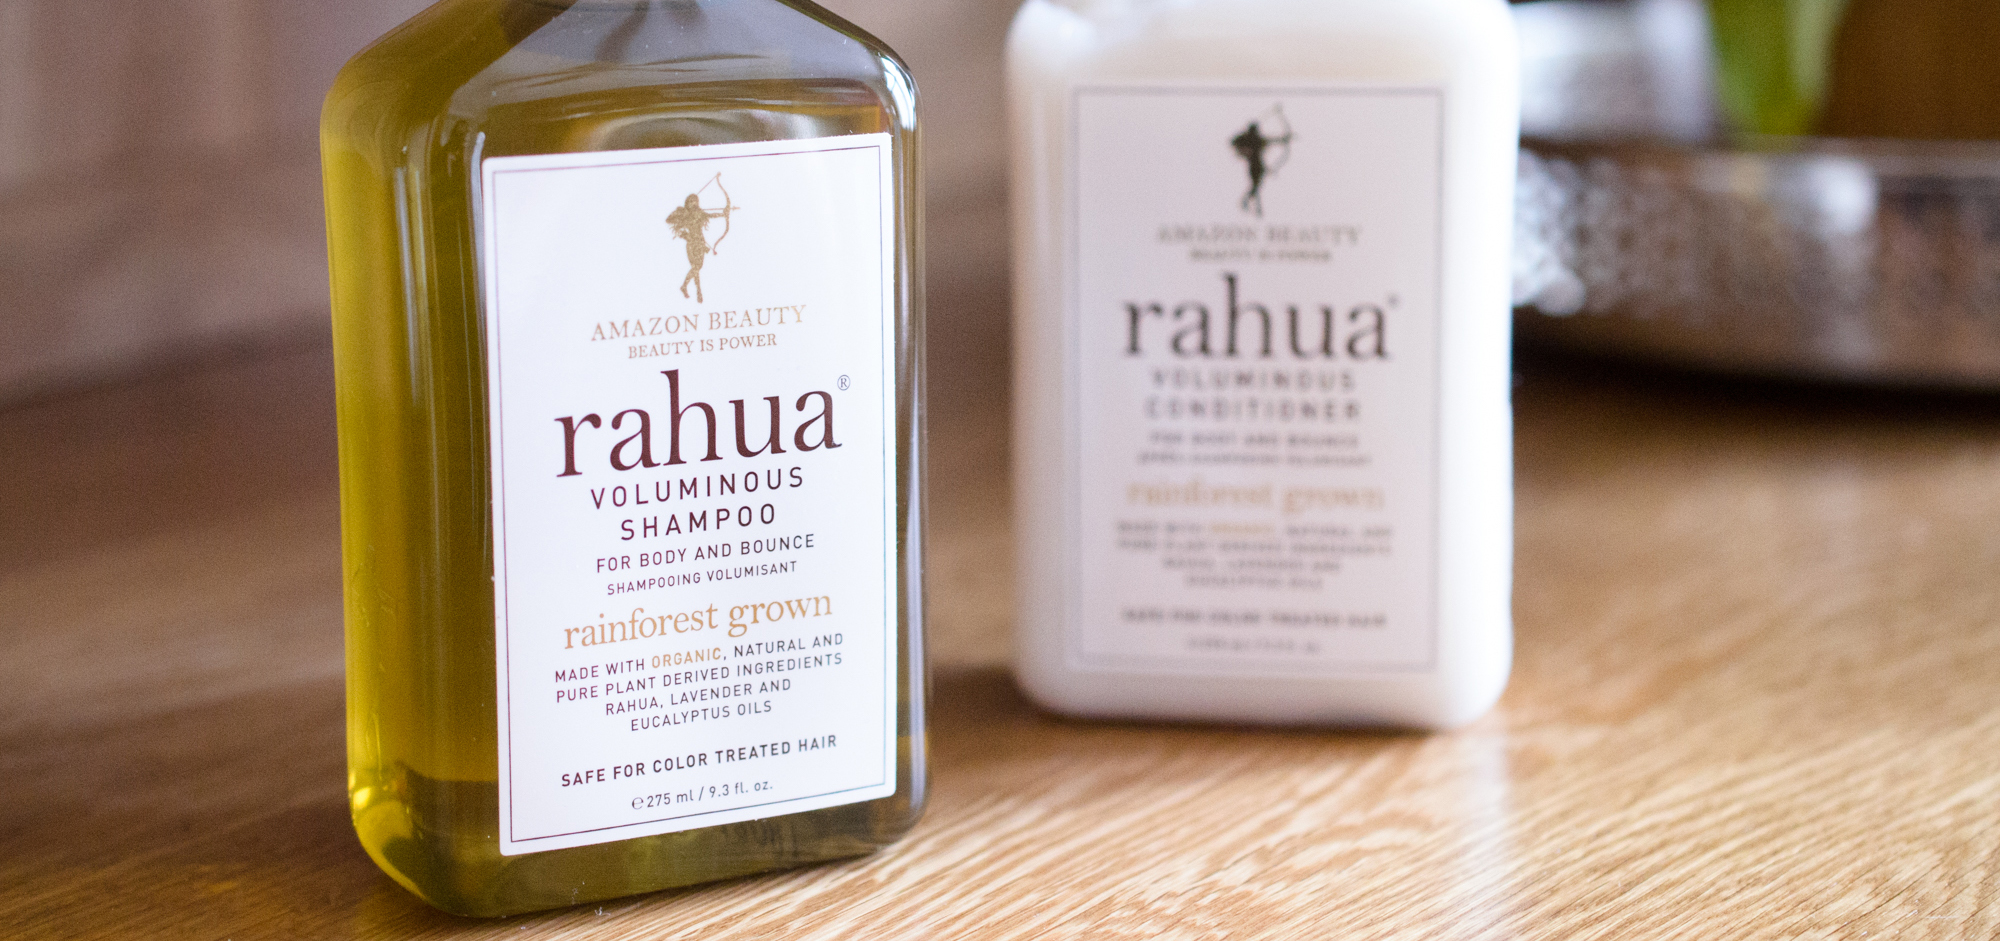 Rahua Voluminous Shampoo & Conditioner review